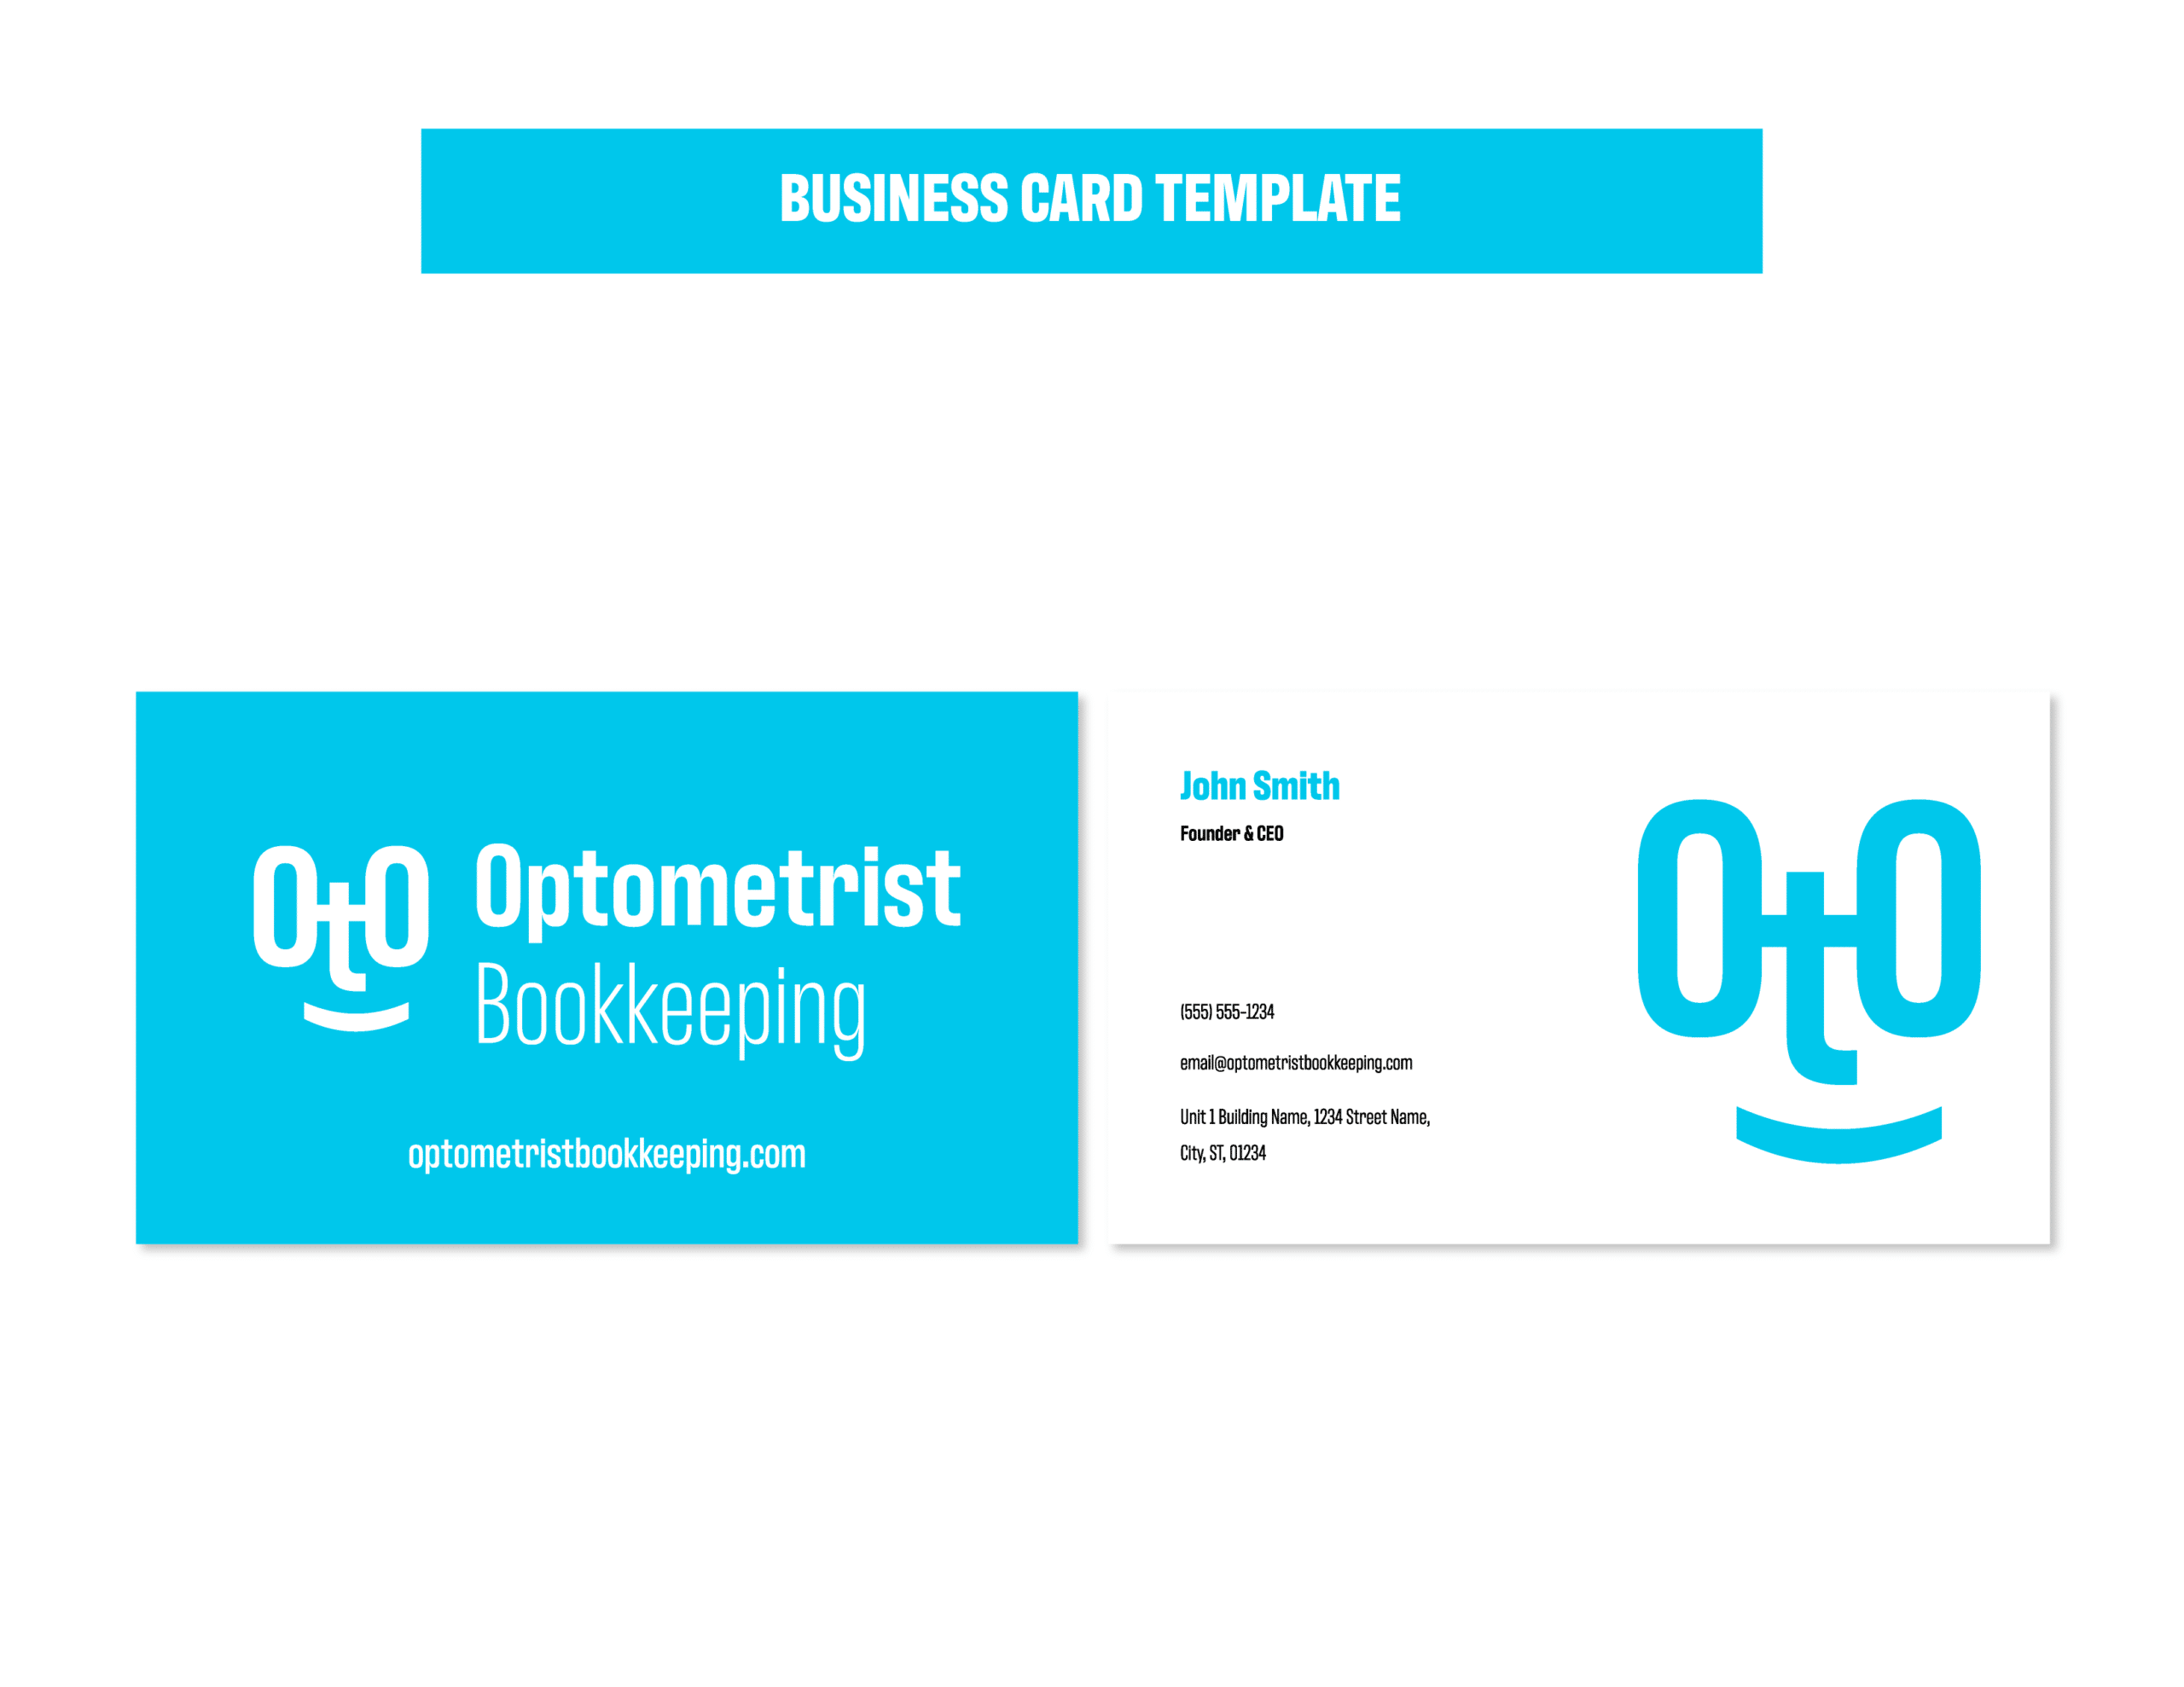 04OptometristBK_Showcase_Business Card Template